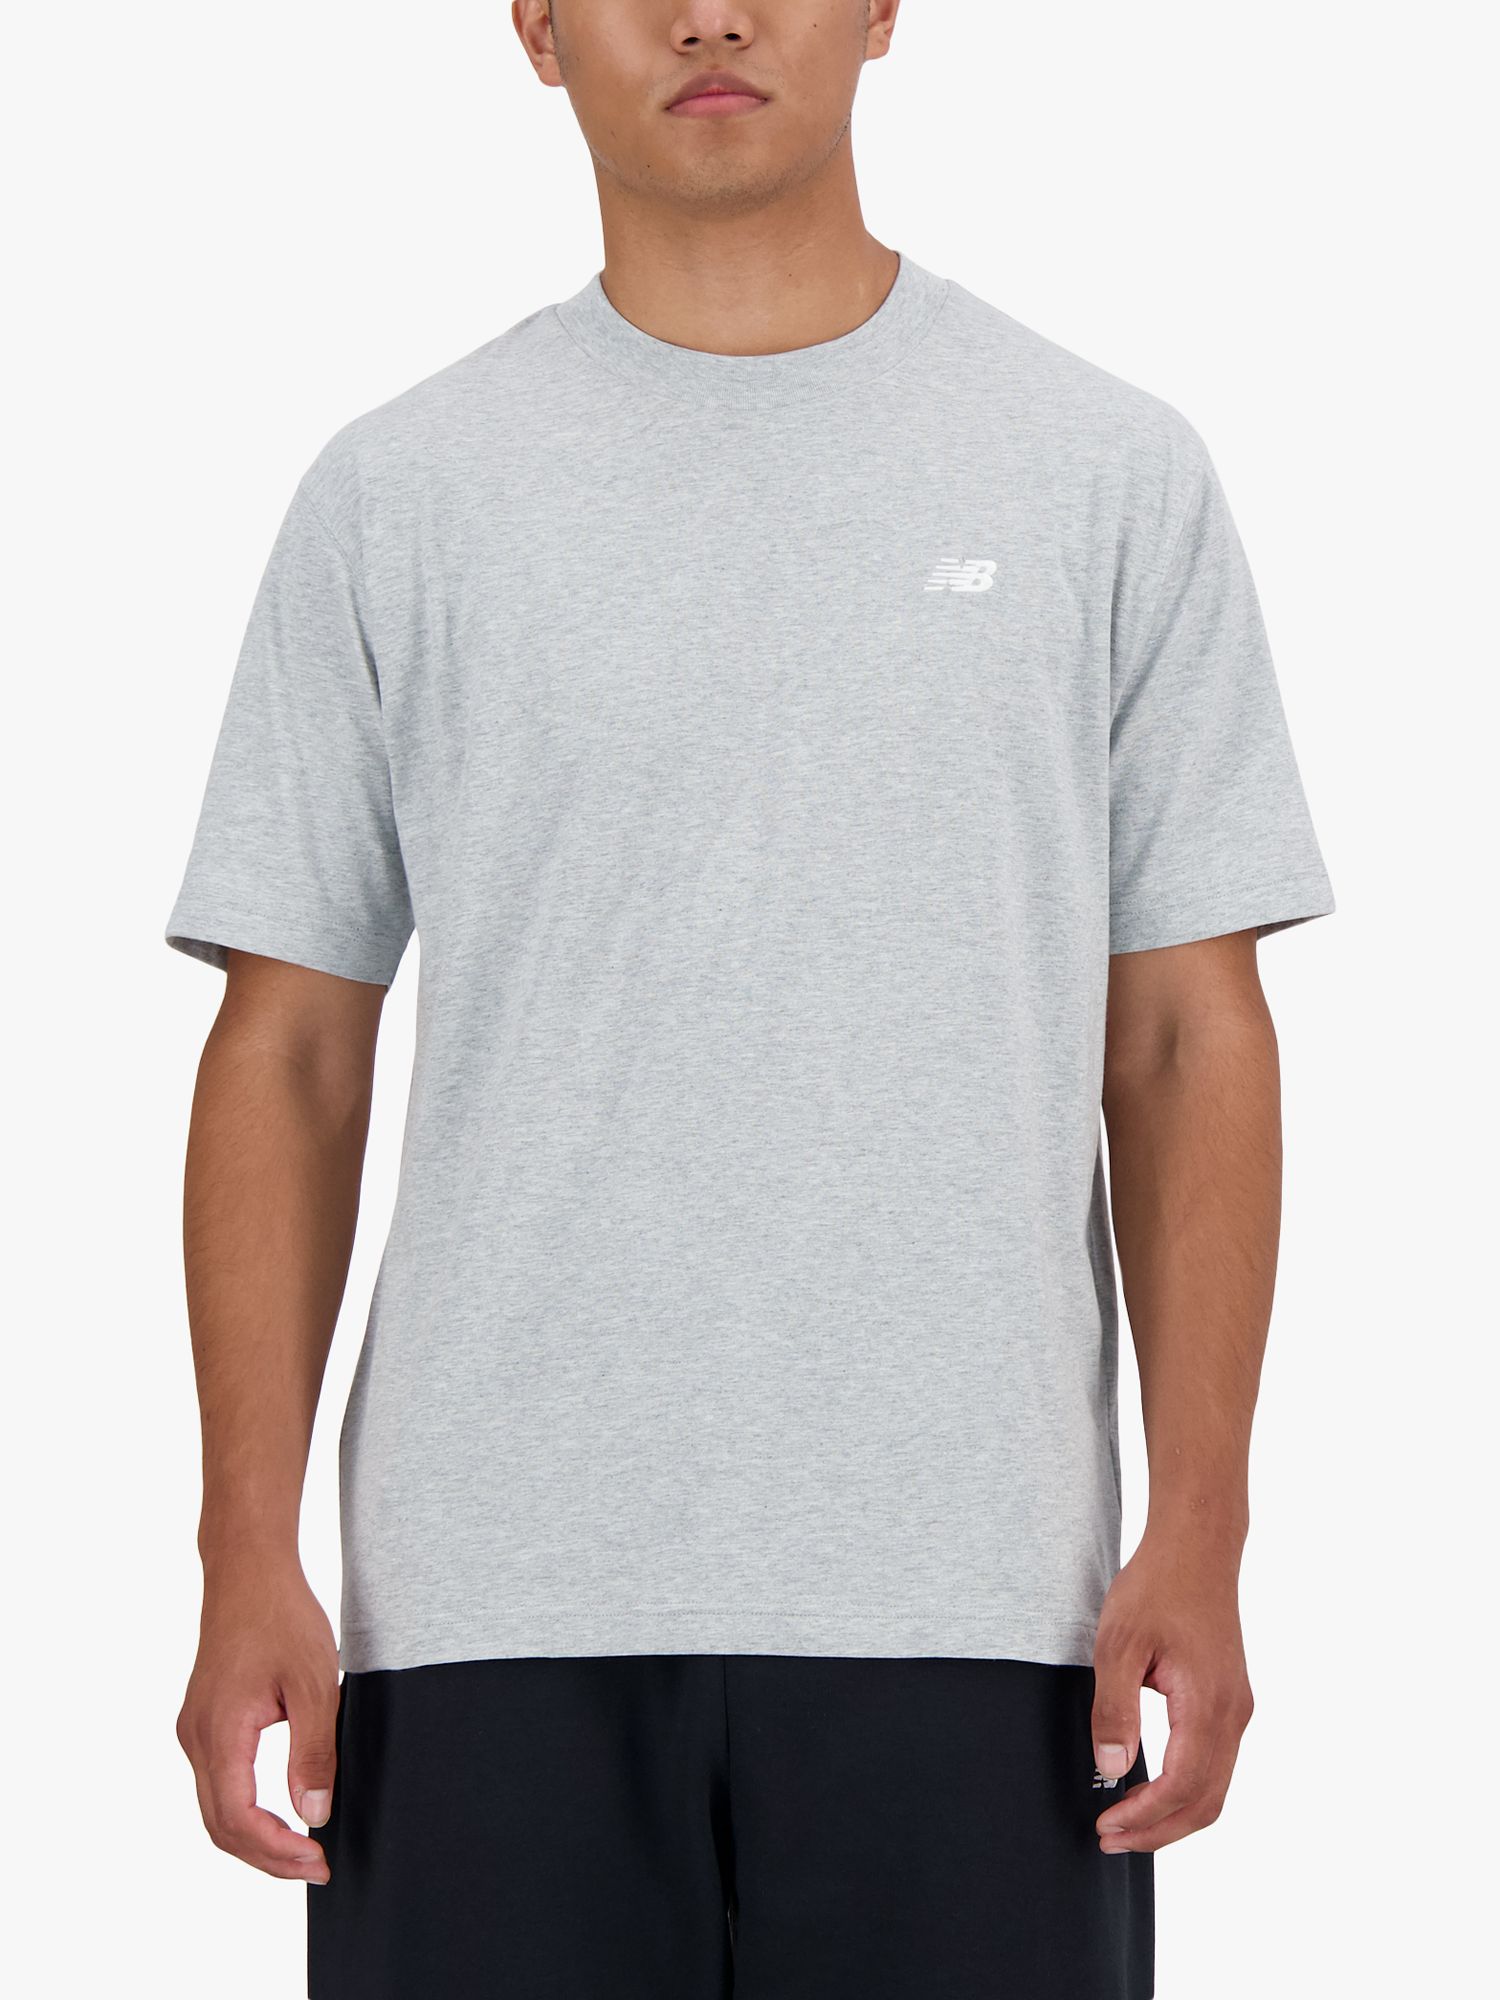 New Balance Small Logo T-Shirt, Grey, S